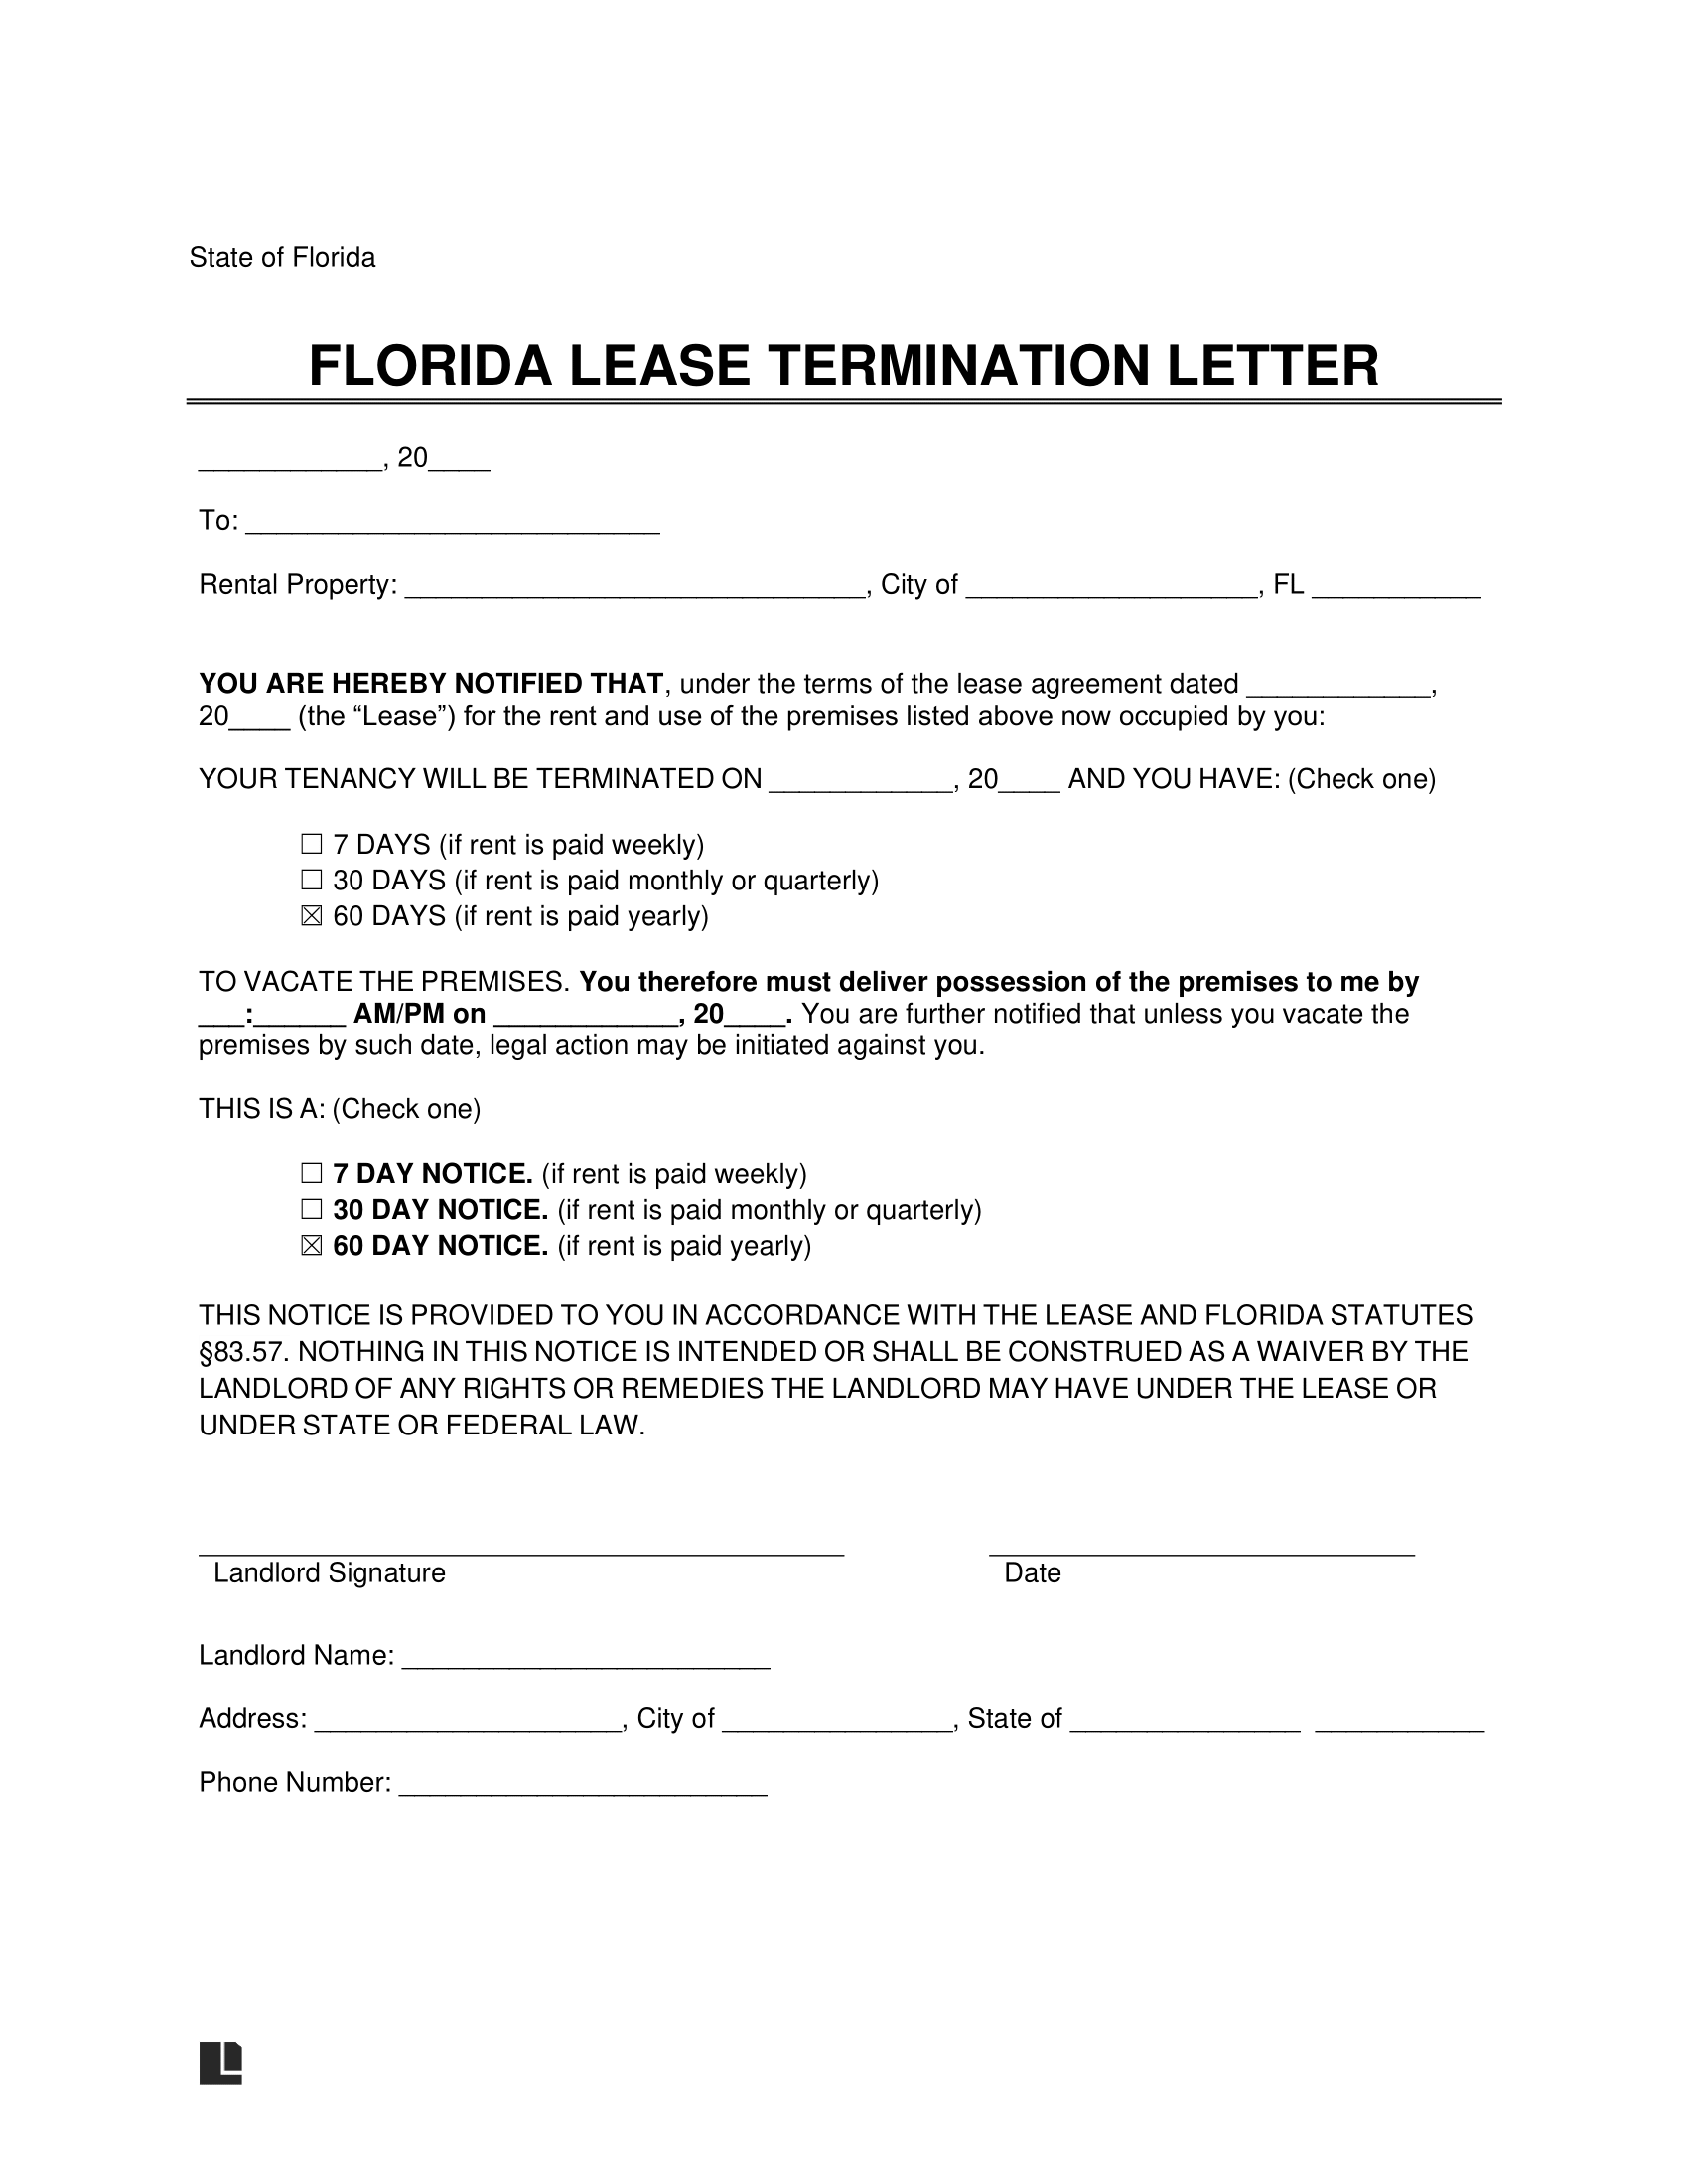 Florida Lease Termination Letter Template